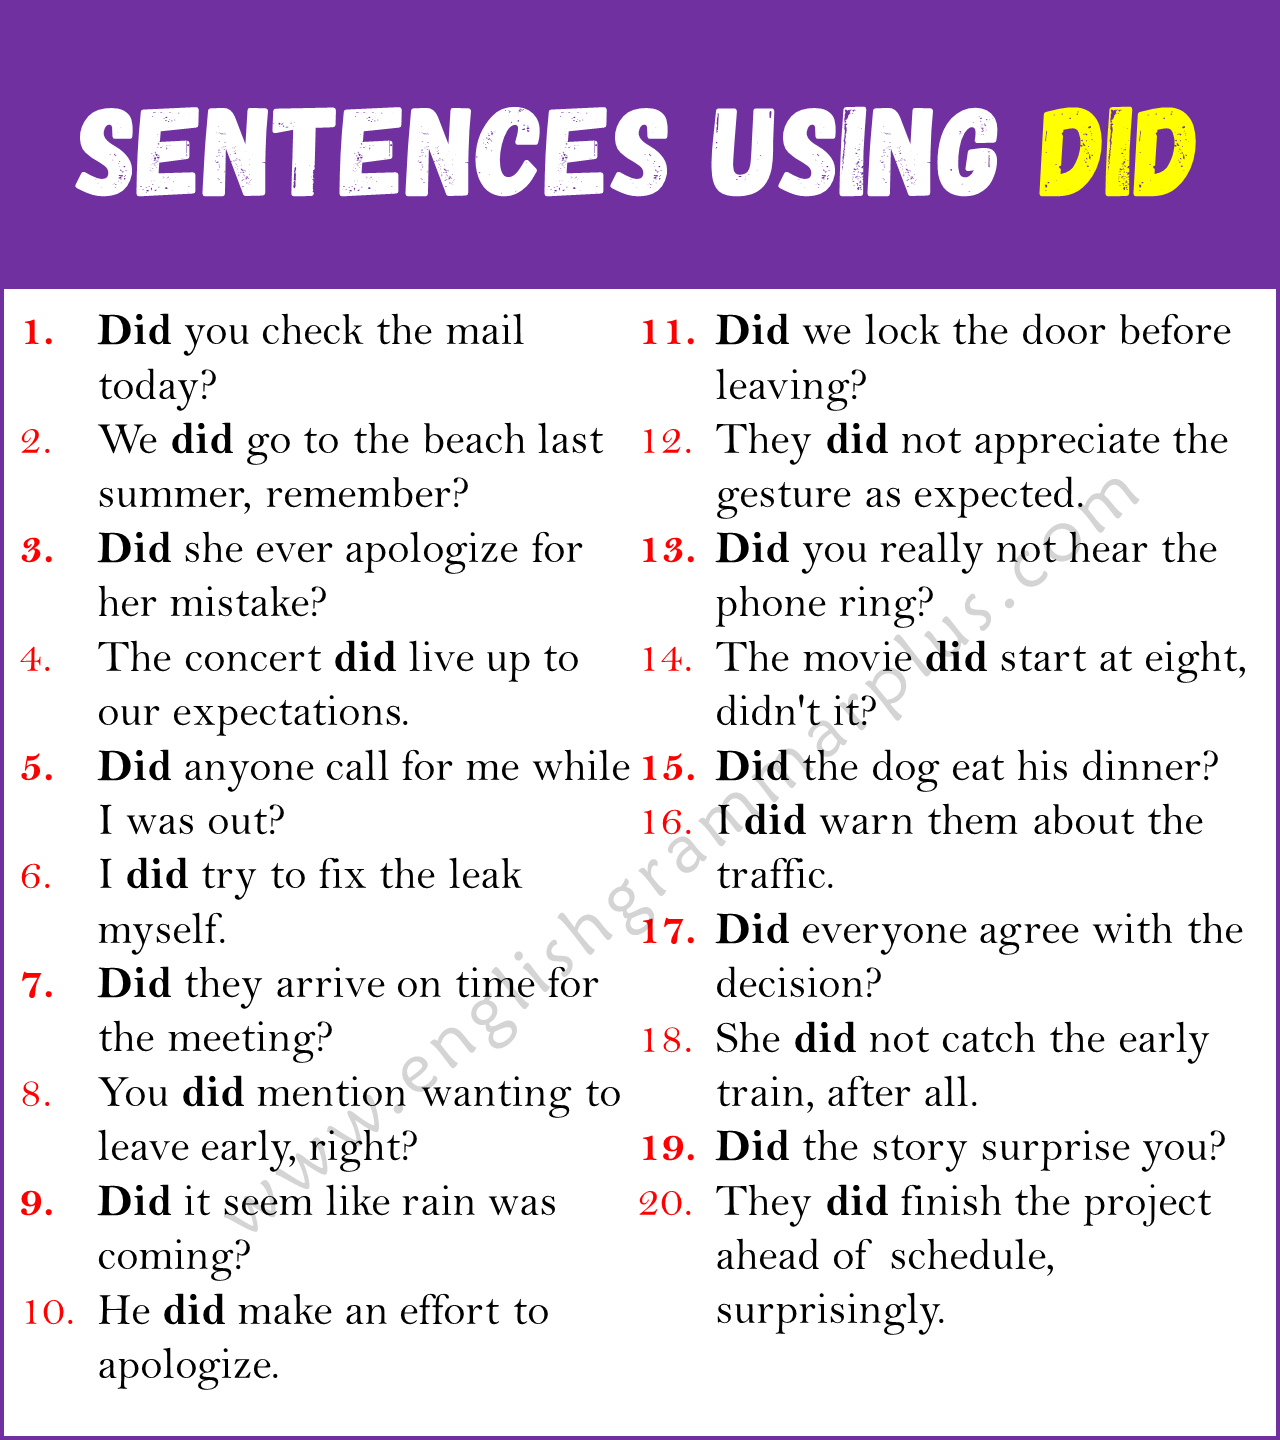 Sentences Using DID